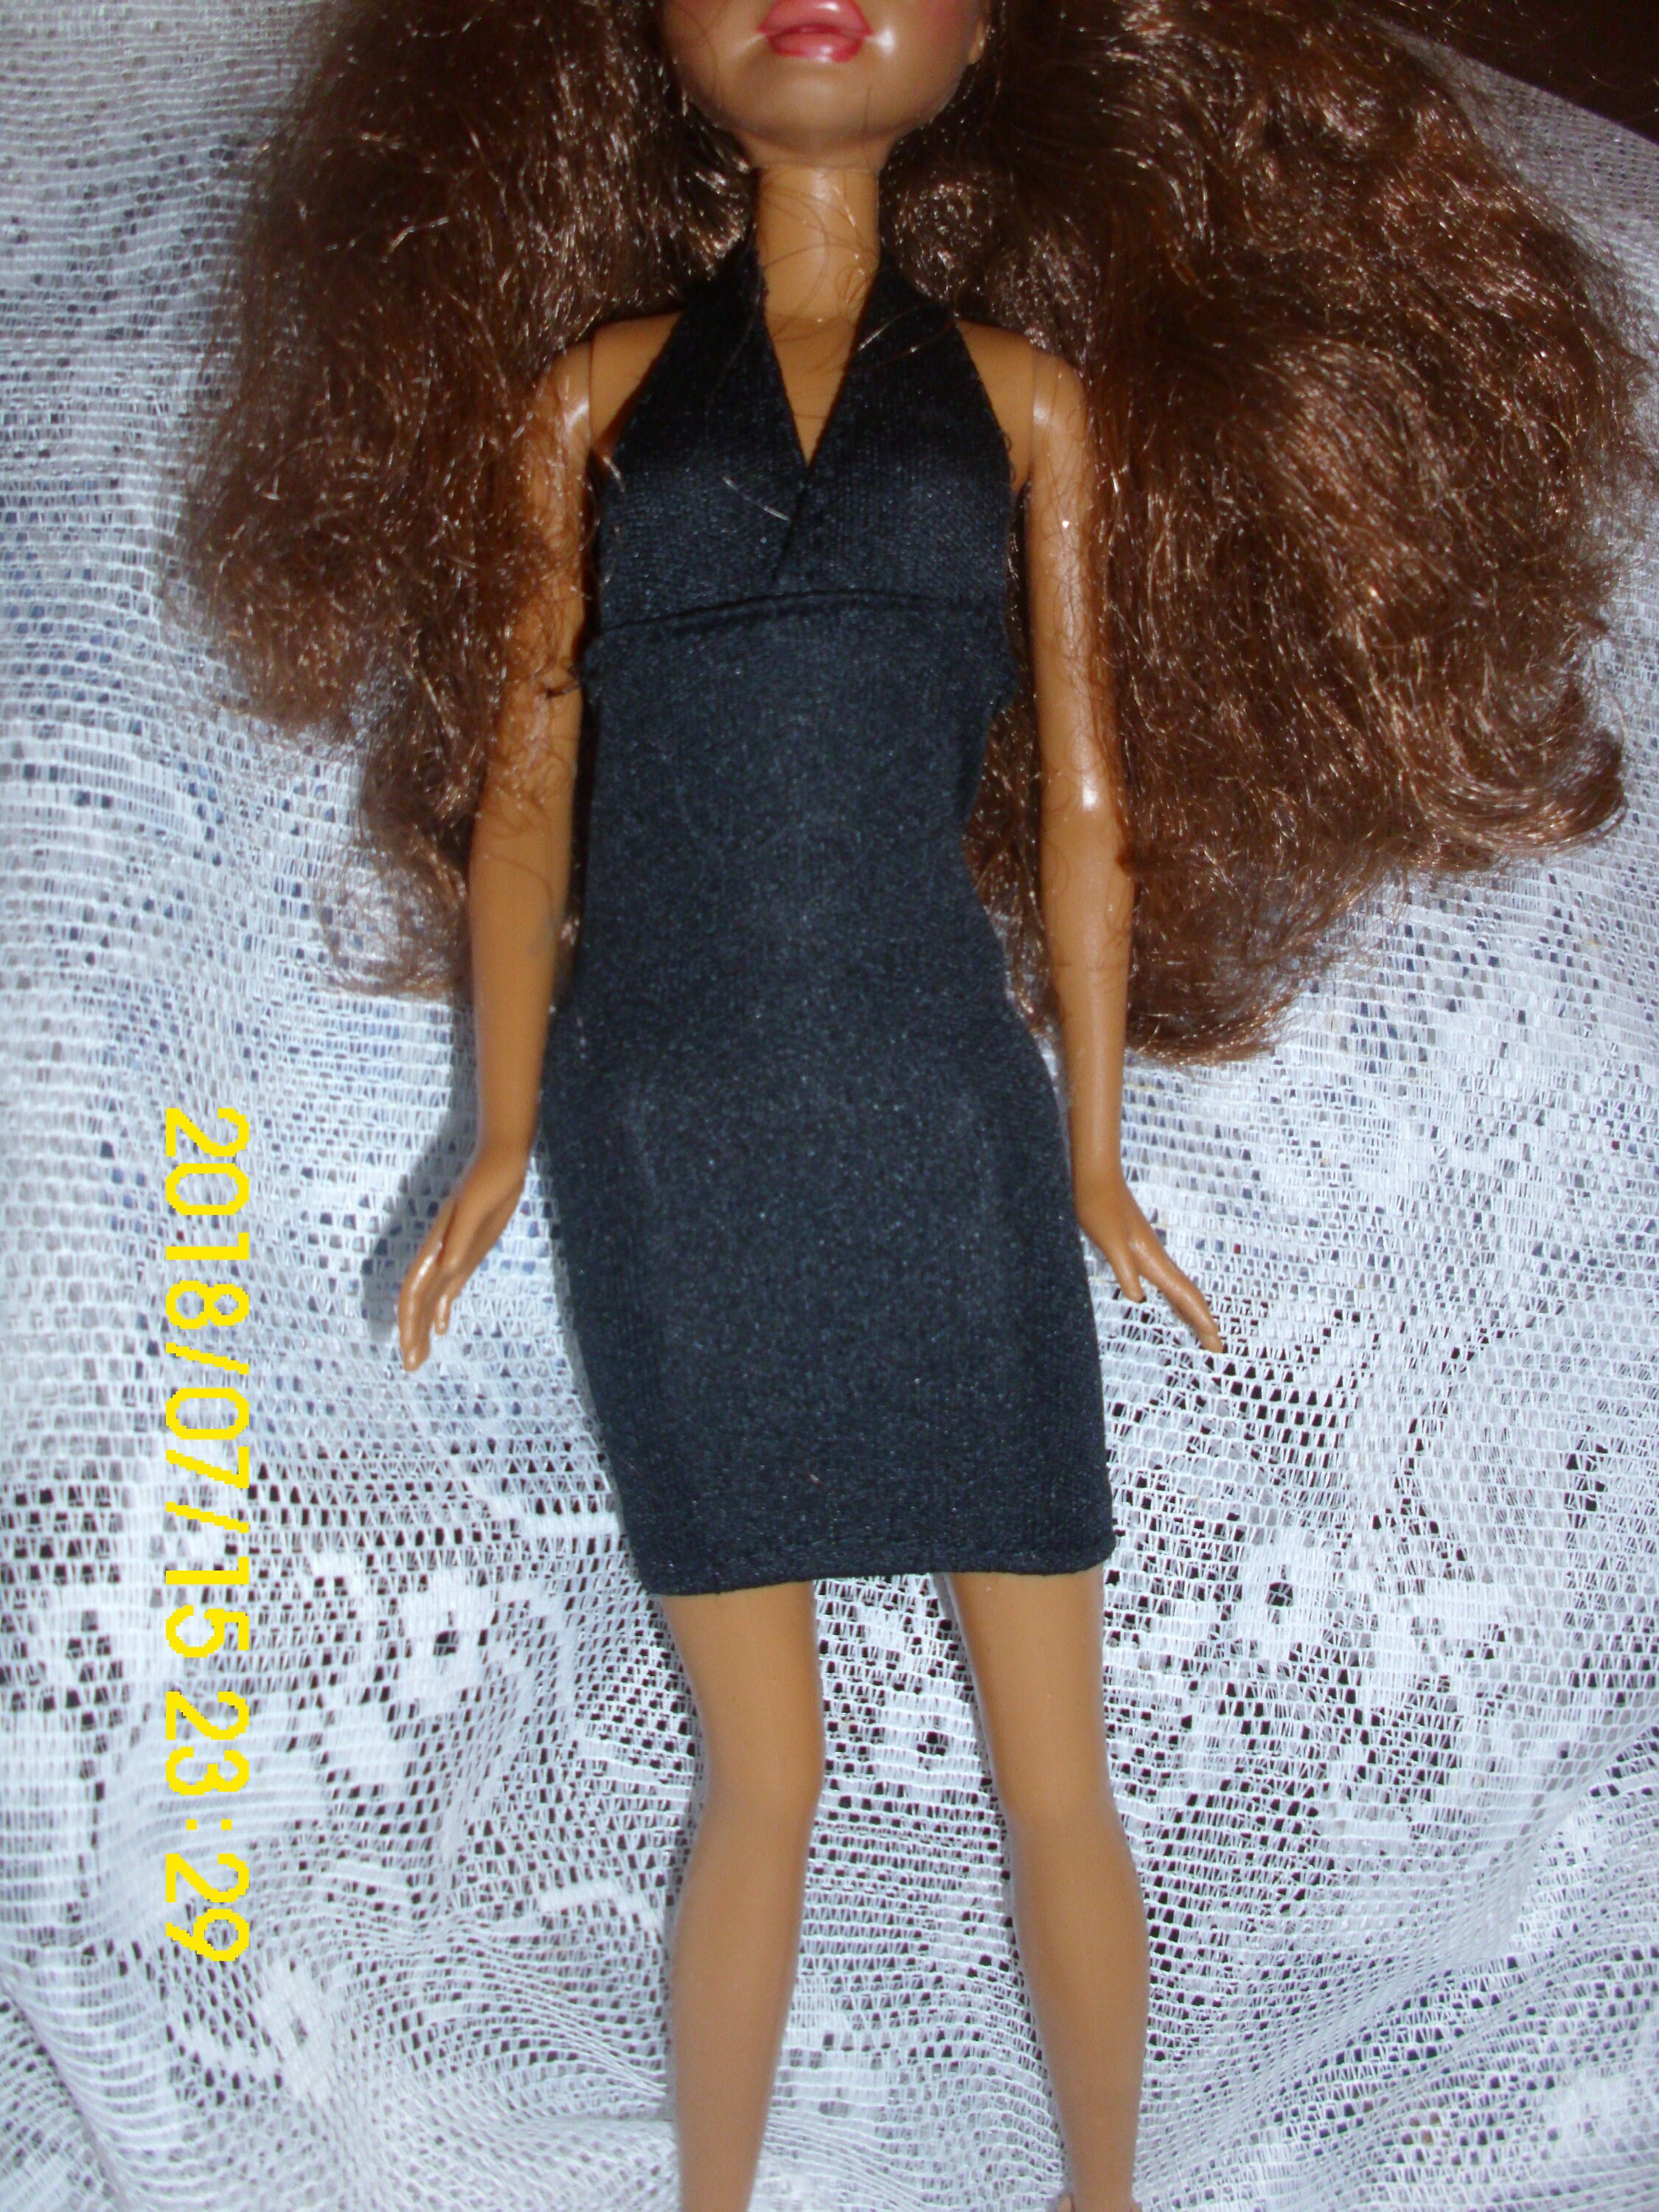 Barbie Doll My Scene Madison Fab Faces Fashion Metallic Lace Ruffle Dress 